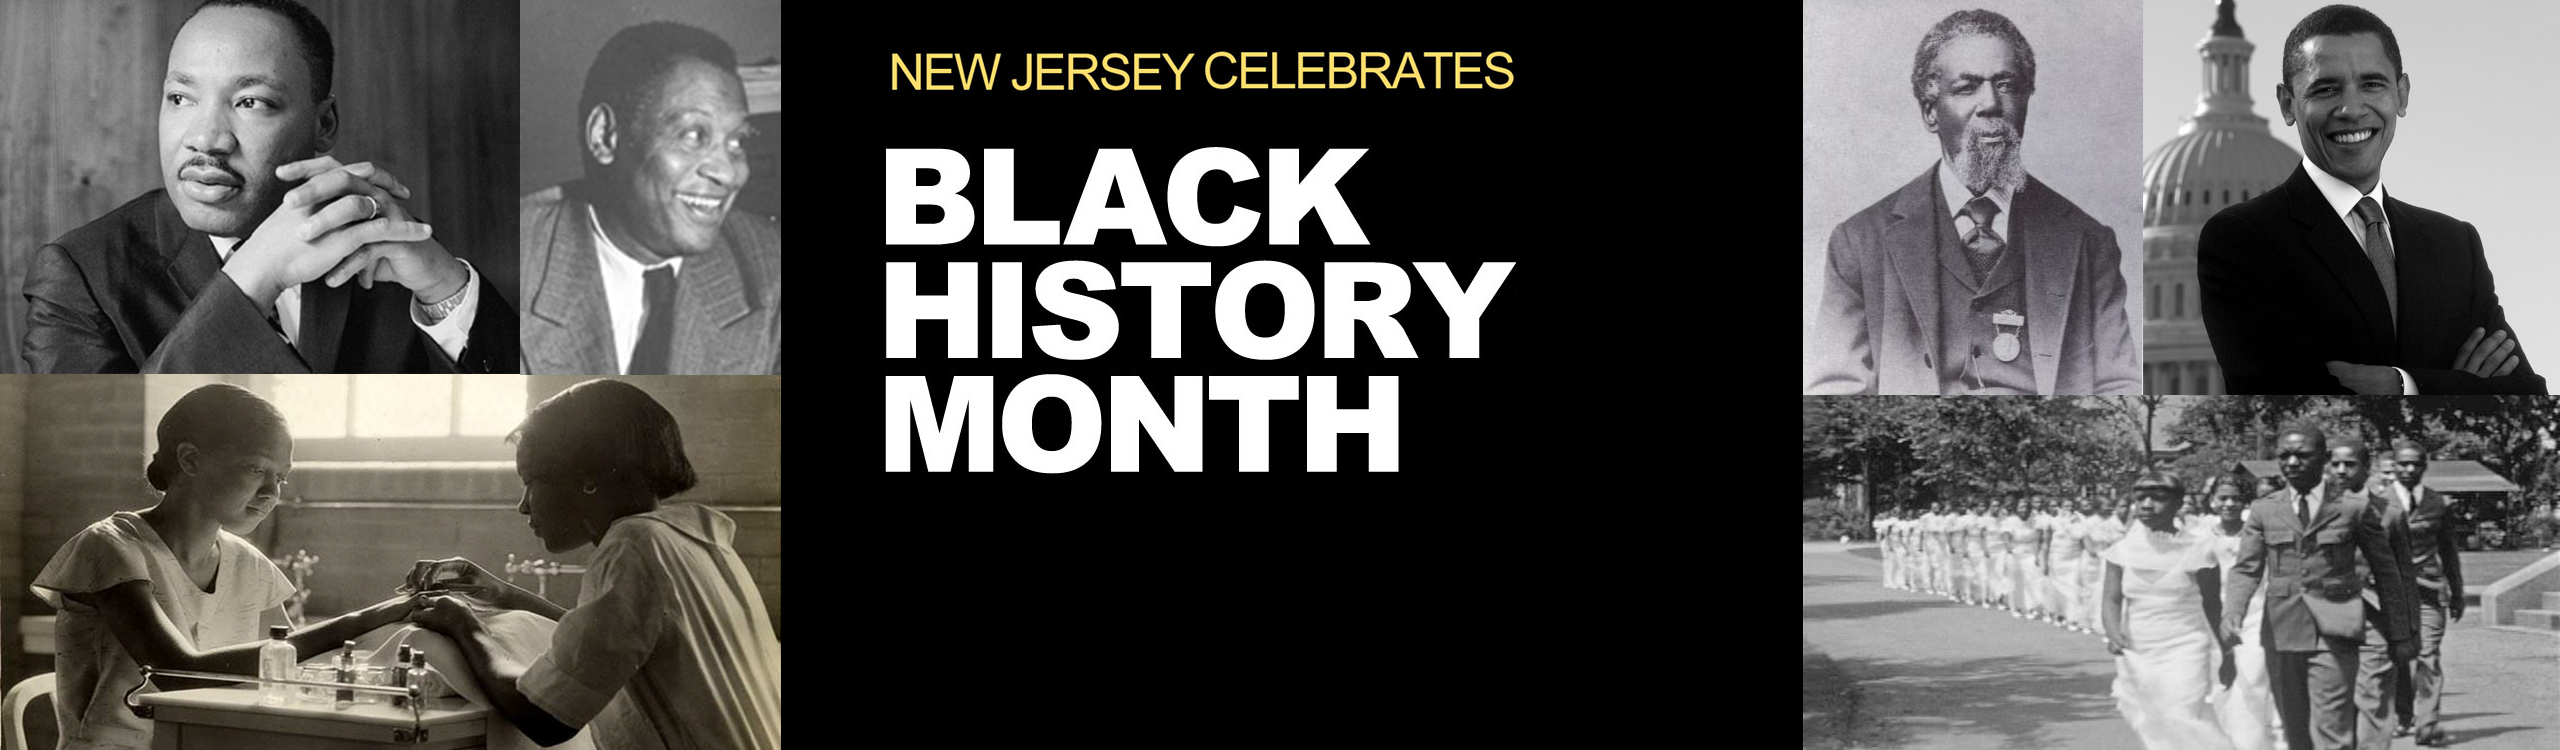 New Jersey Celebrates Black History Month